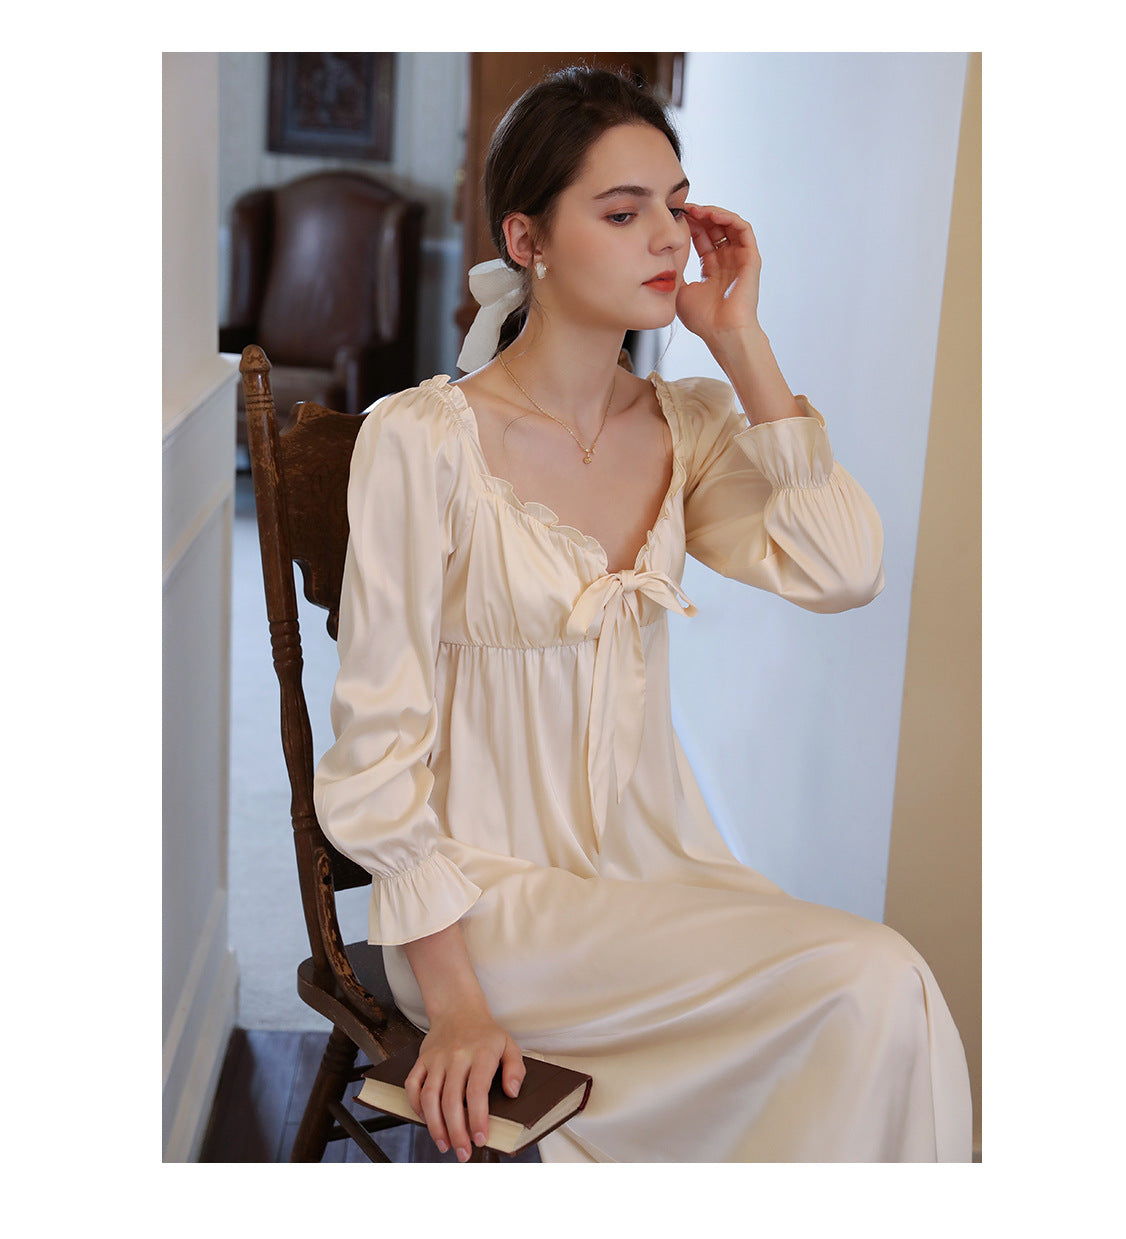 Nightgown Romantic Women Nightwear Sleep Dress  Satin Long Sleeve Sleeping Dress  Beautiful Bowknot